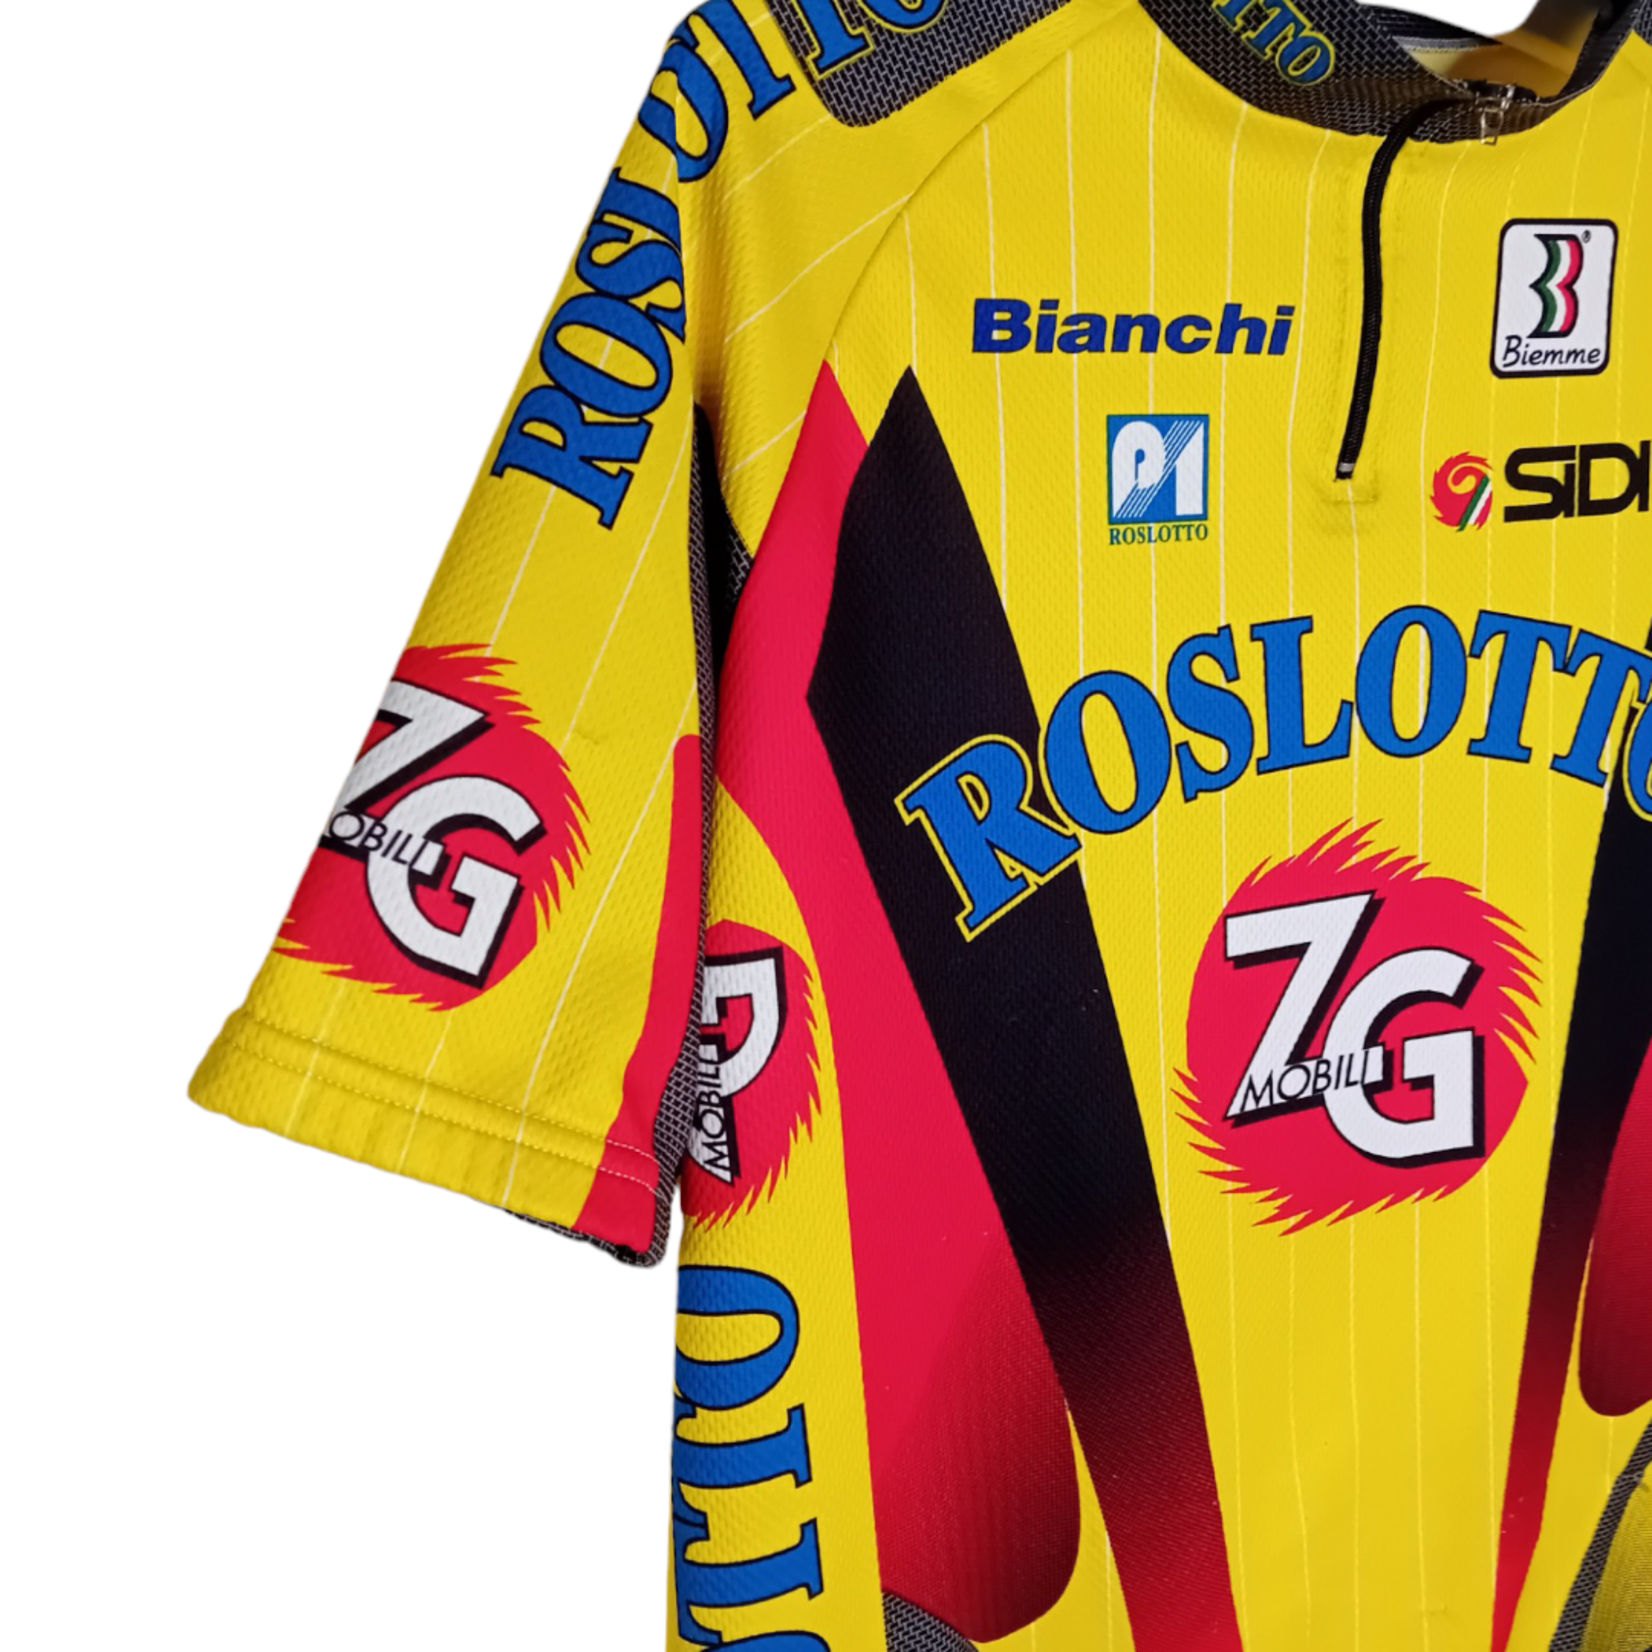 Biemme Sport Origineel Biemme Sport vintage wielershirt Roslotto ZG Mobili 1997